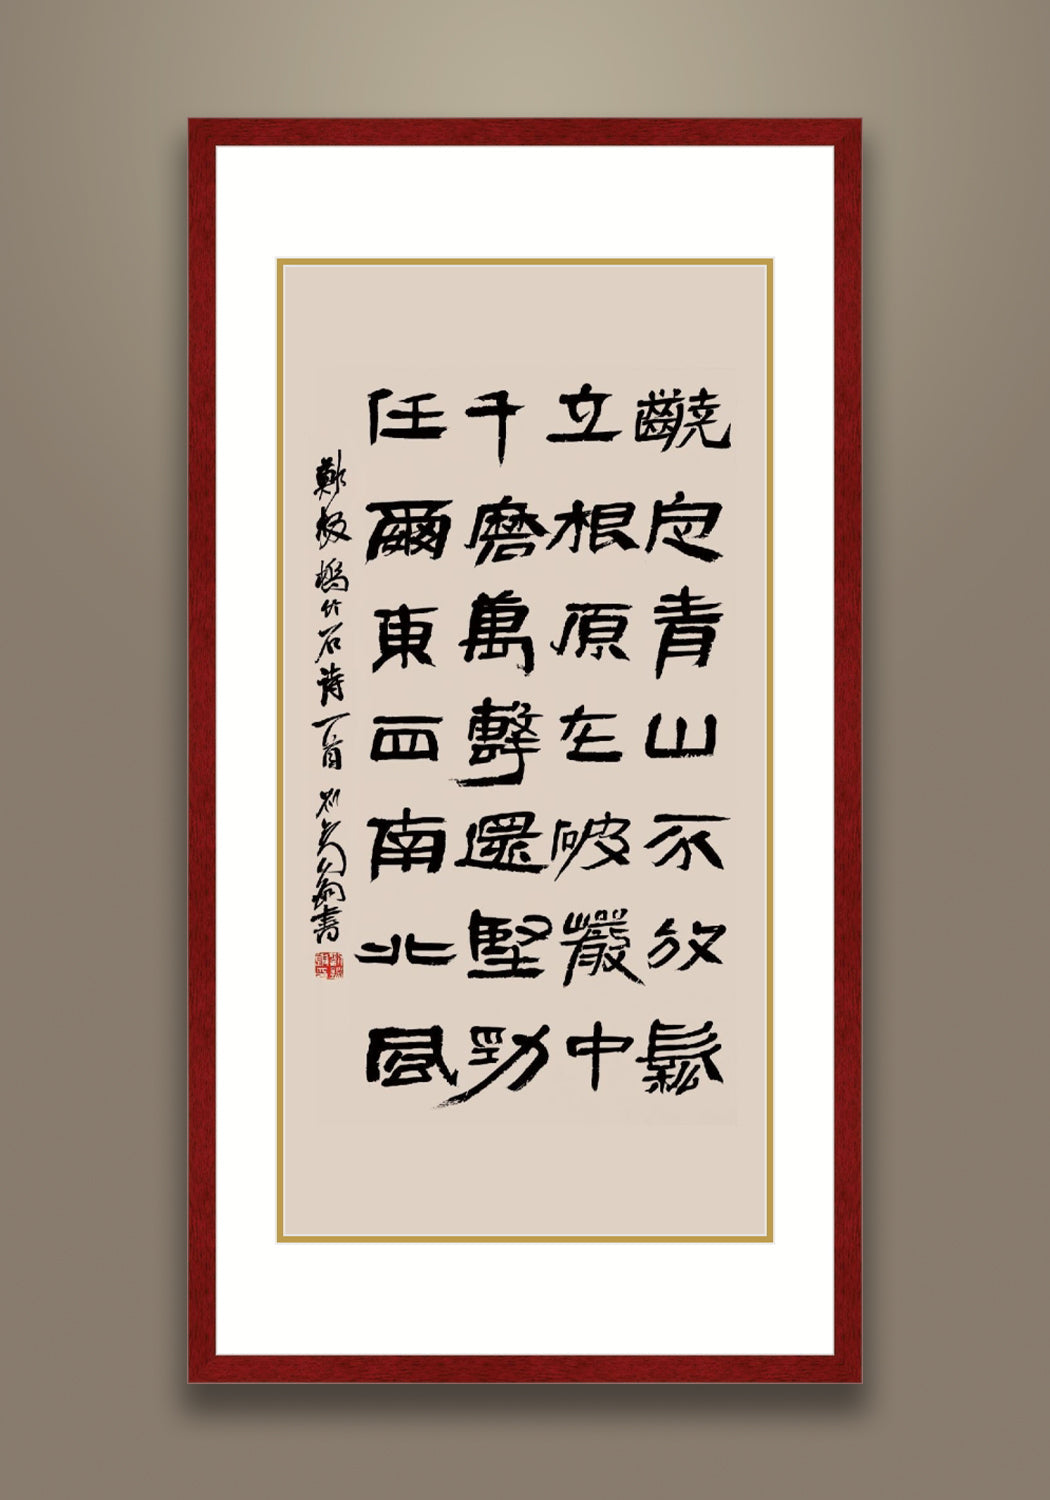 Bamboo Poem by Zheng Banqiao